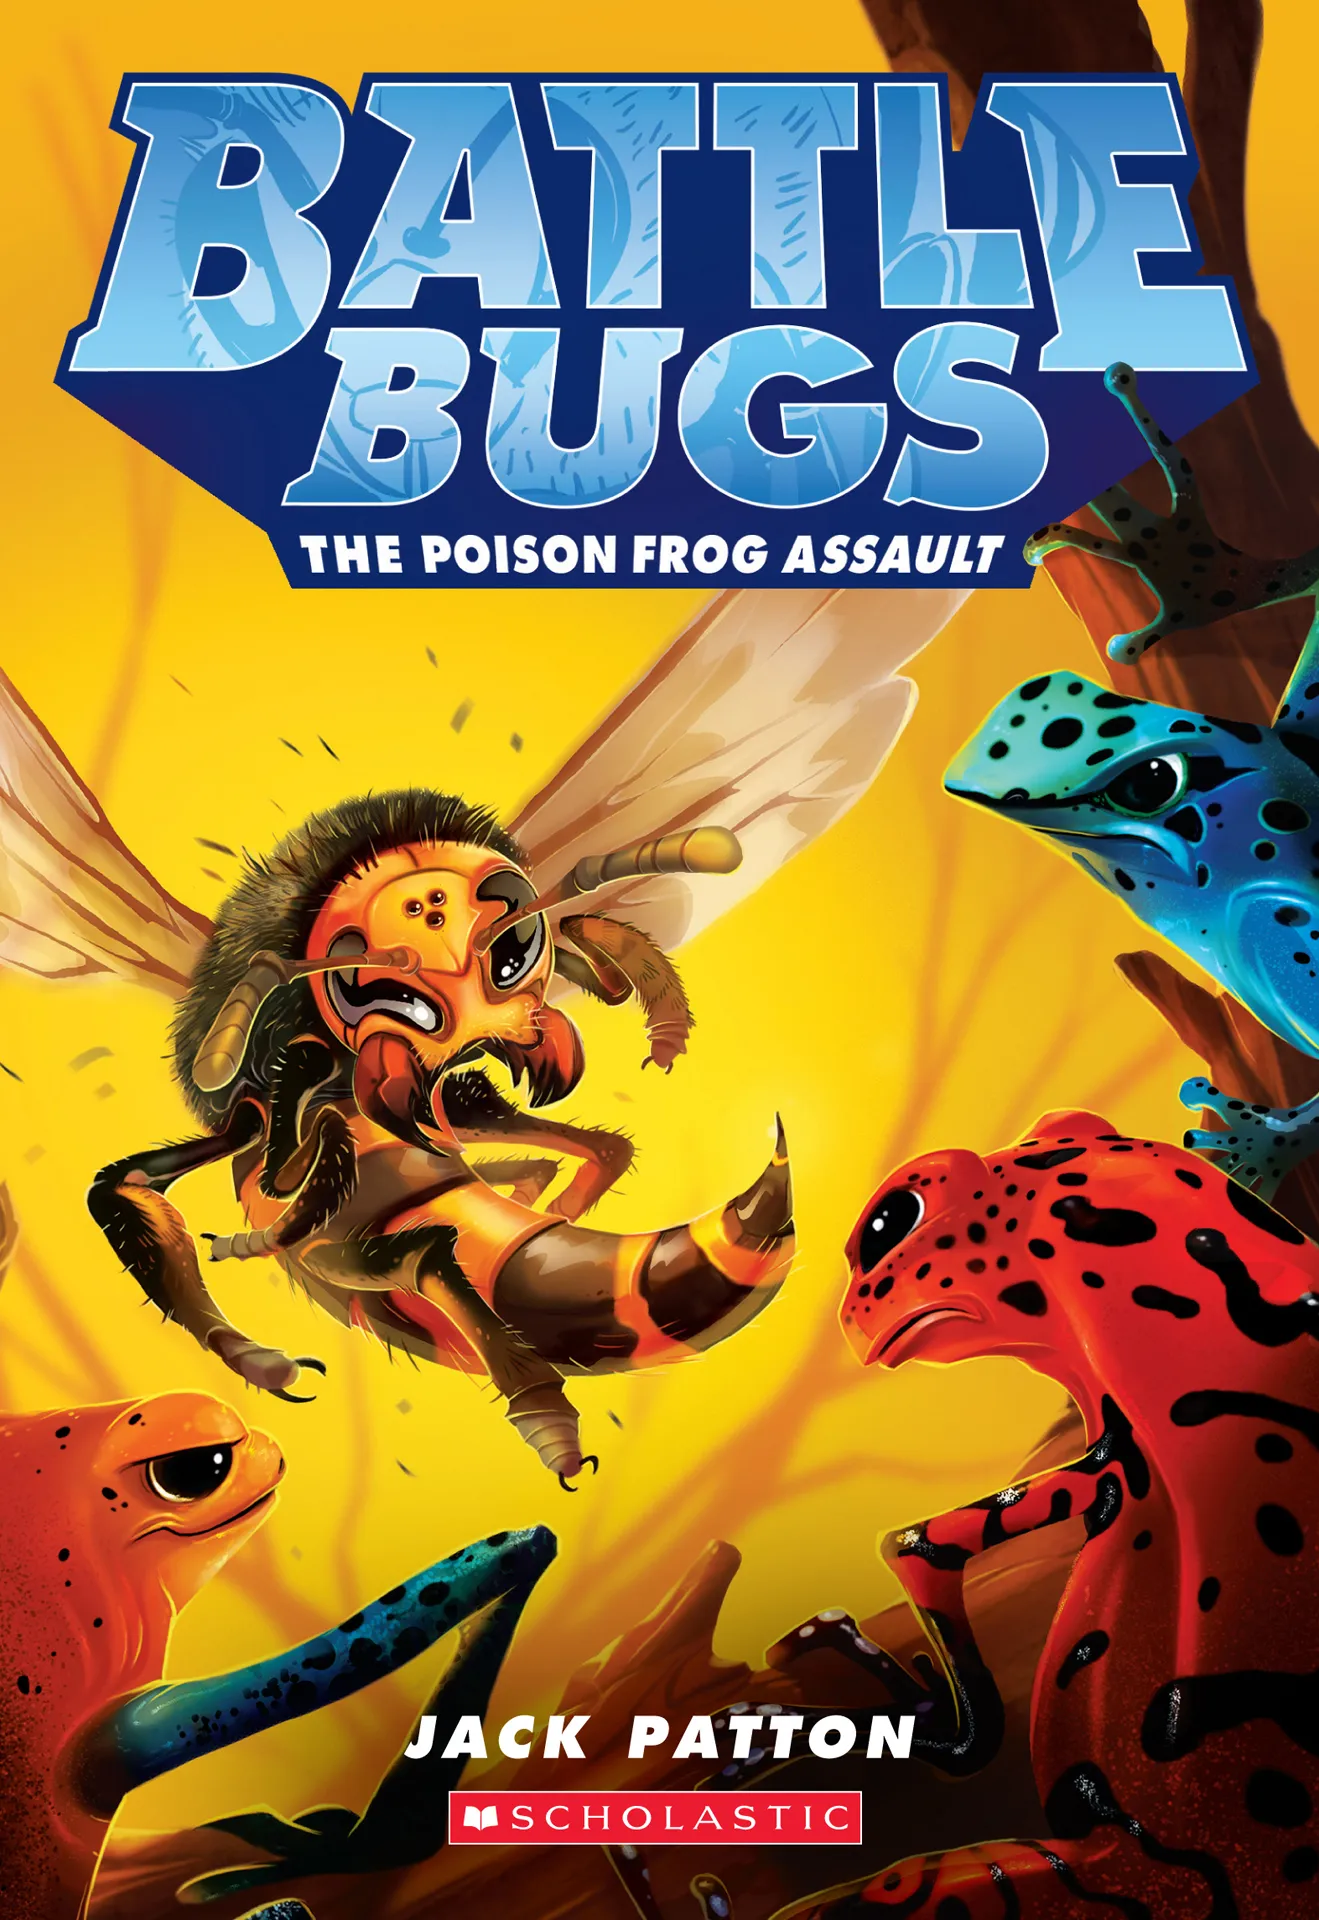 The Poison Frog Assault (Battle Bugs #3)